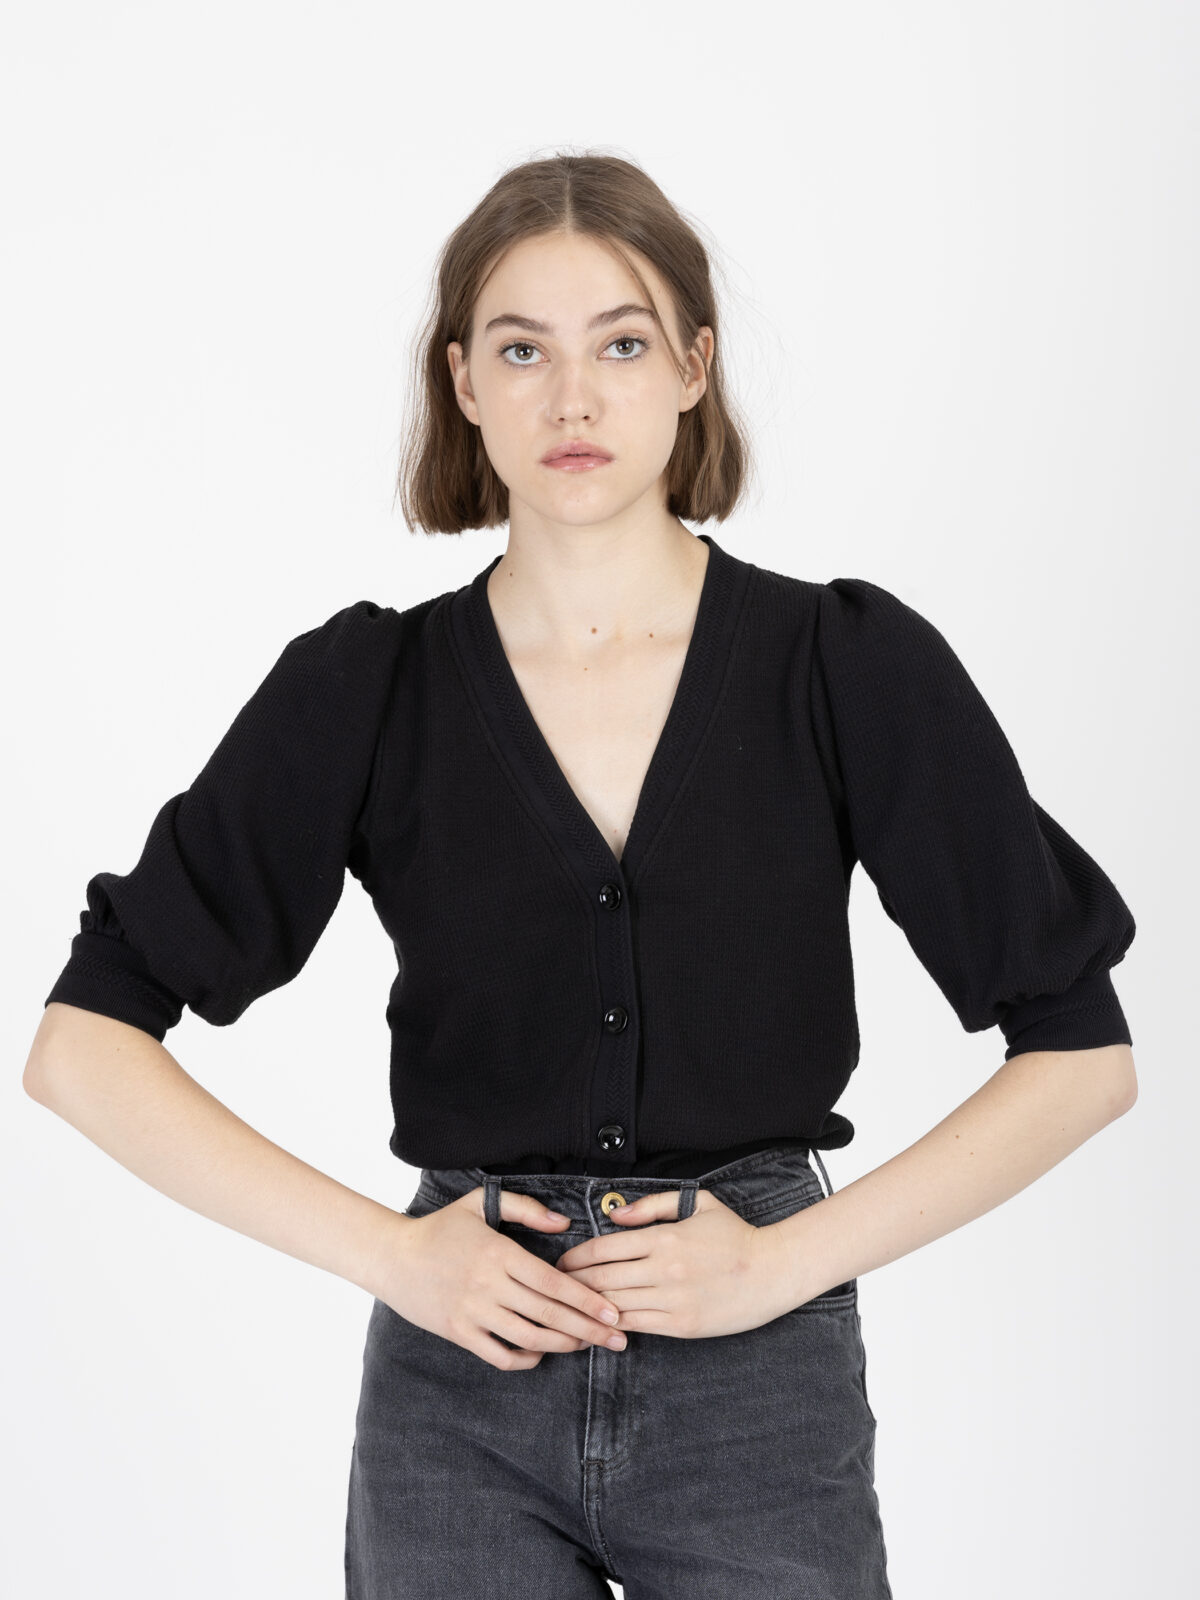 carbonel-black-cotton-cardigan-puffy-sleeves-sessun-vneck-buttons-matchboxathens